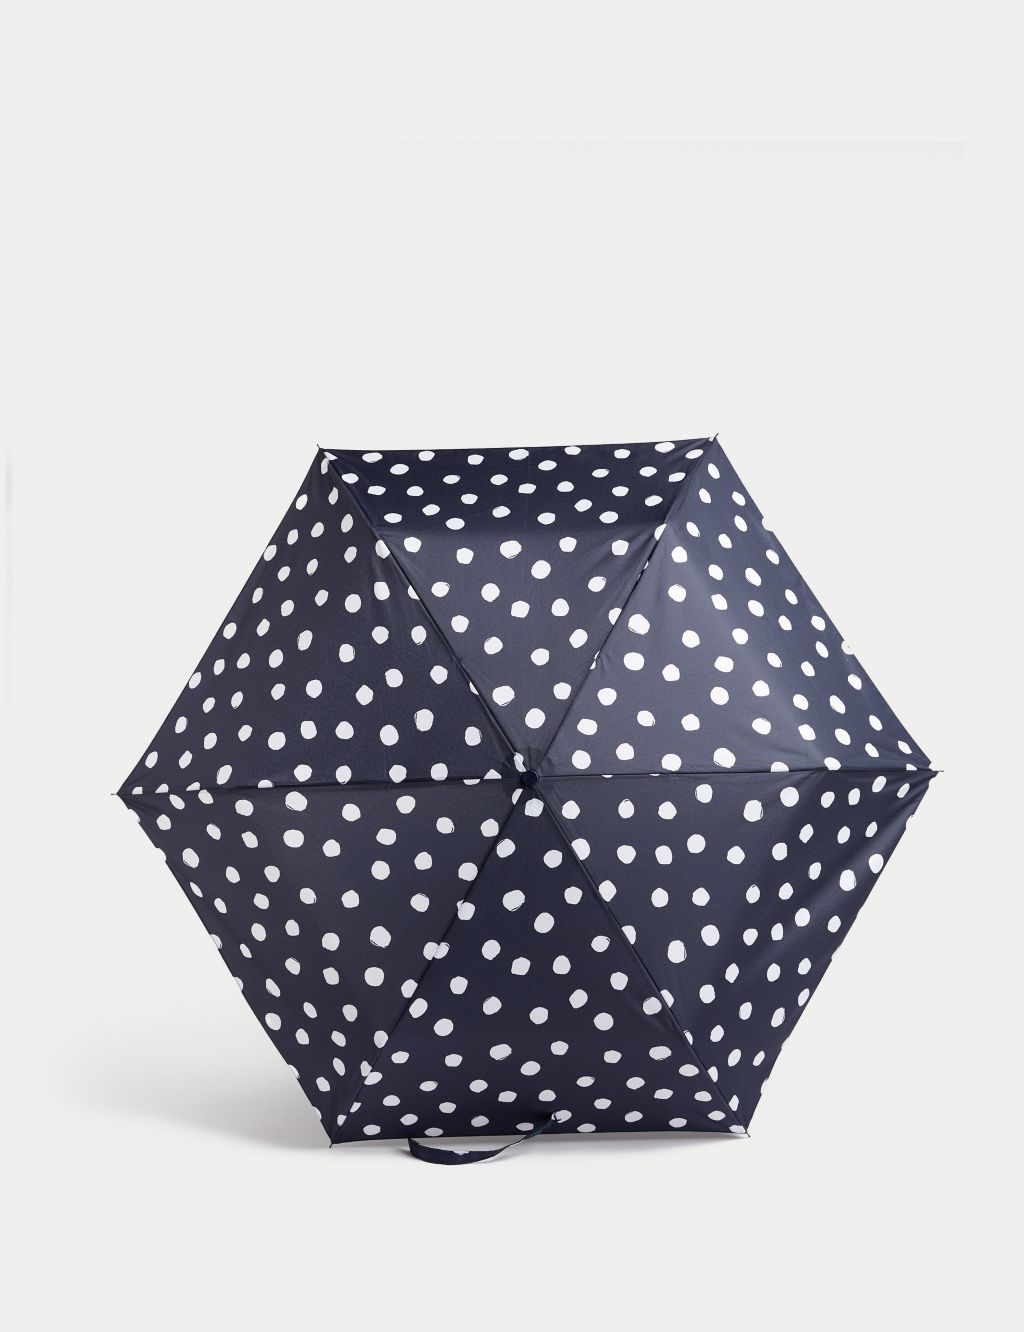 Polka Dot Stormwear™ Compact Umbrella image 2